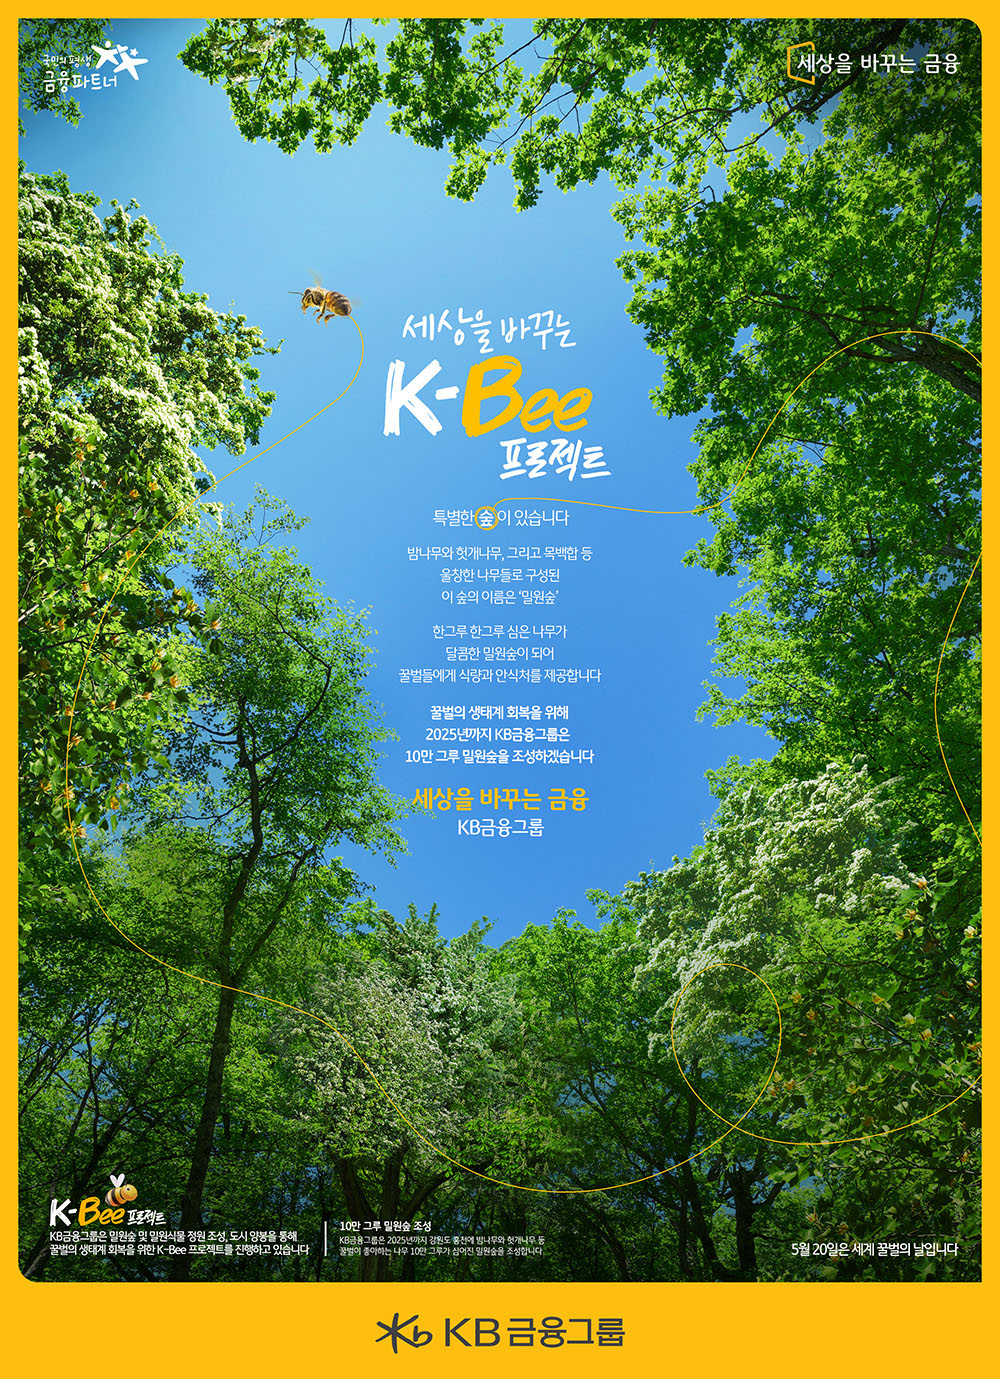 K-Bee 프로젝트 - 밀원숲 조성